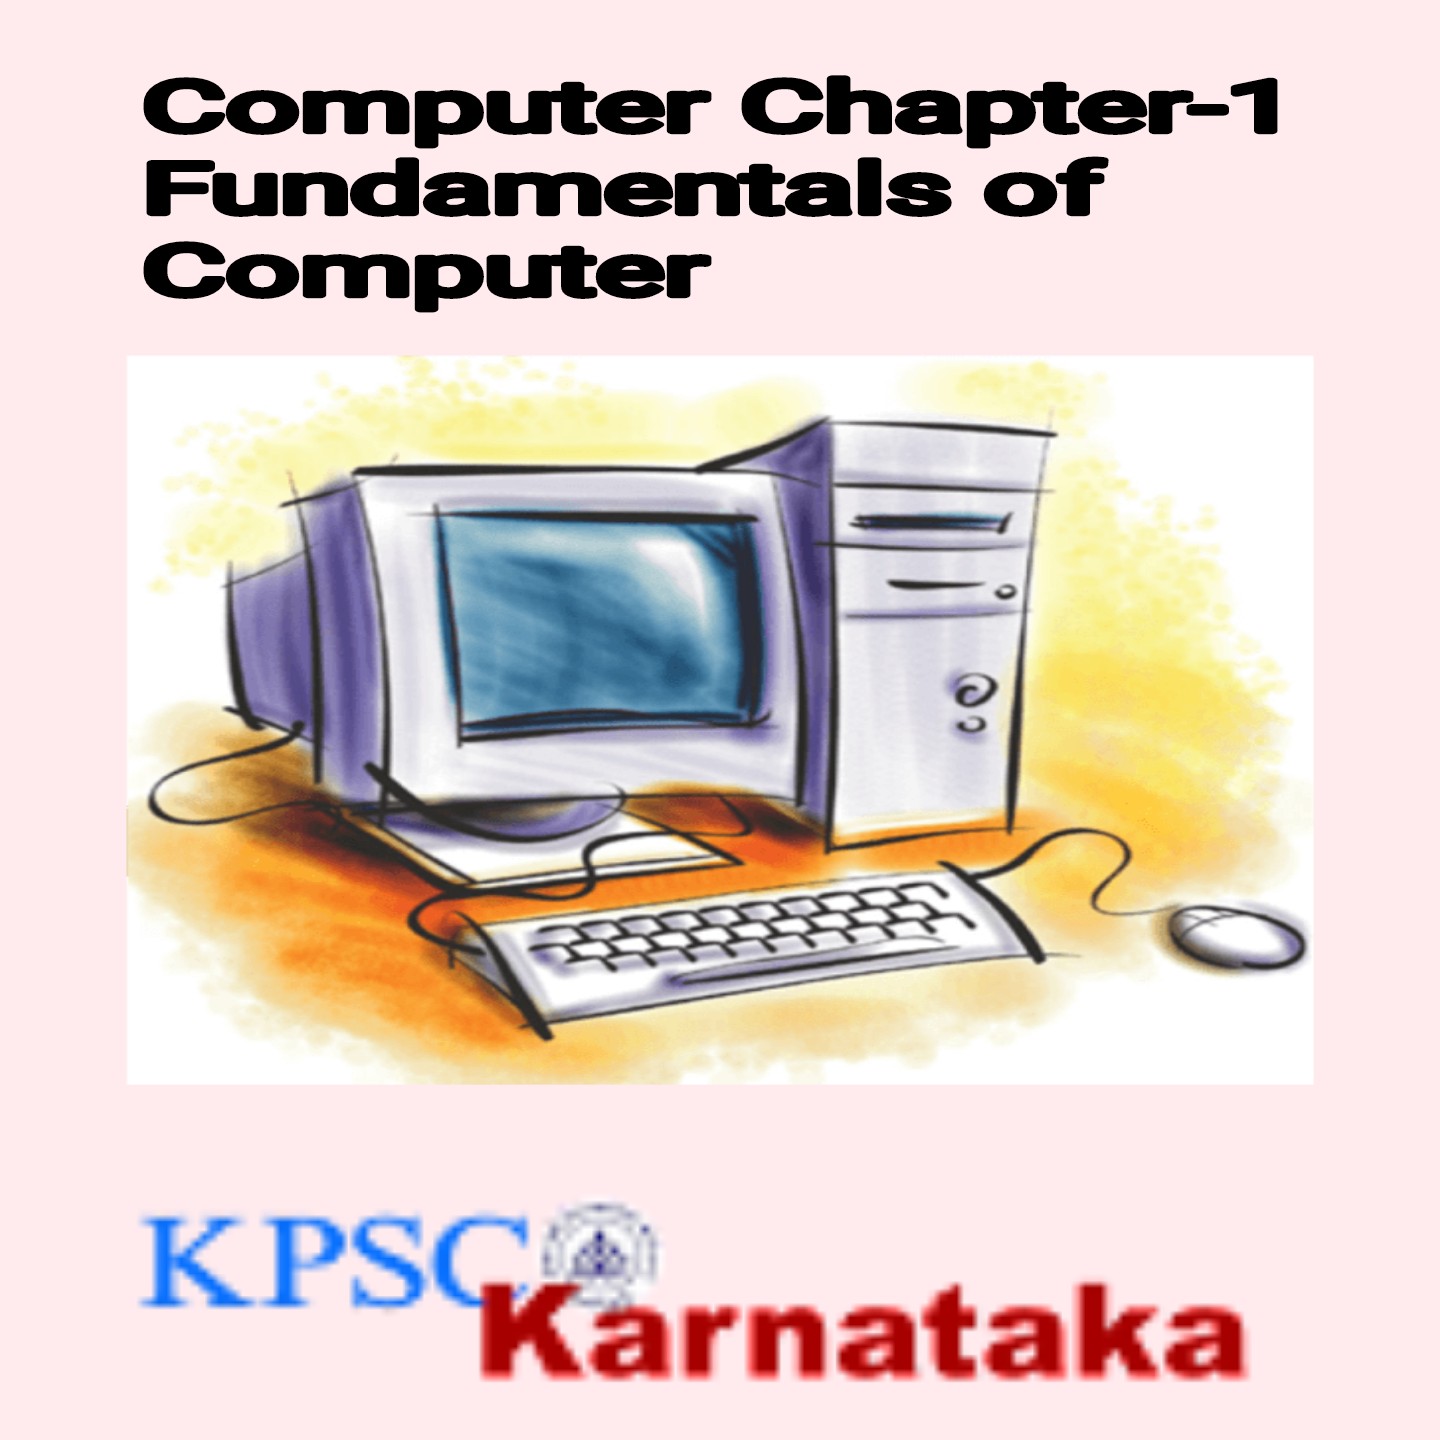 Computer Chapter-1 Fundamentals of Computer